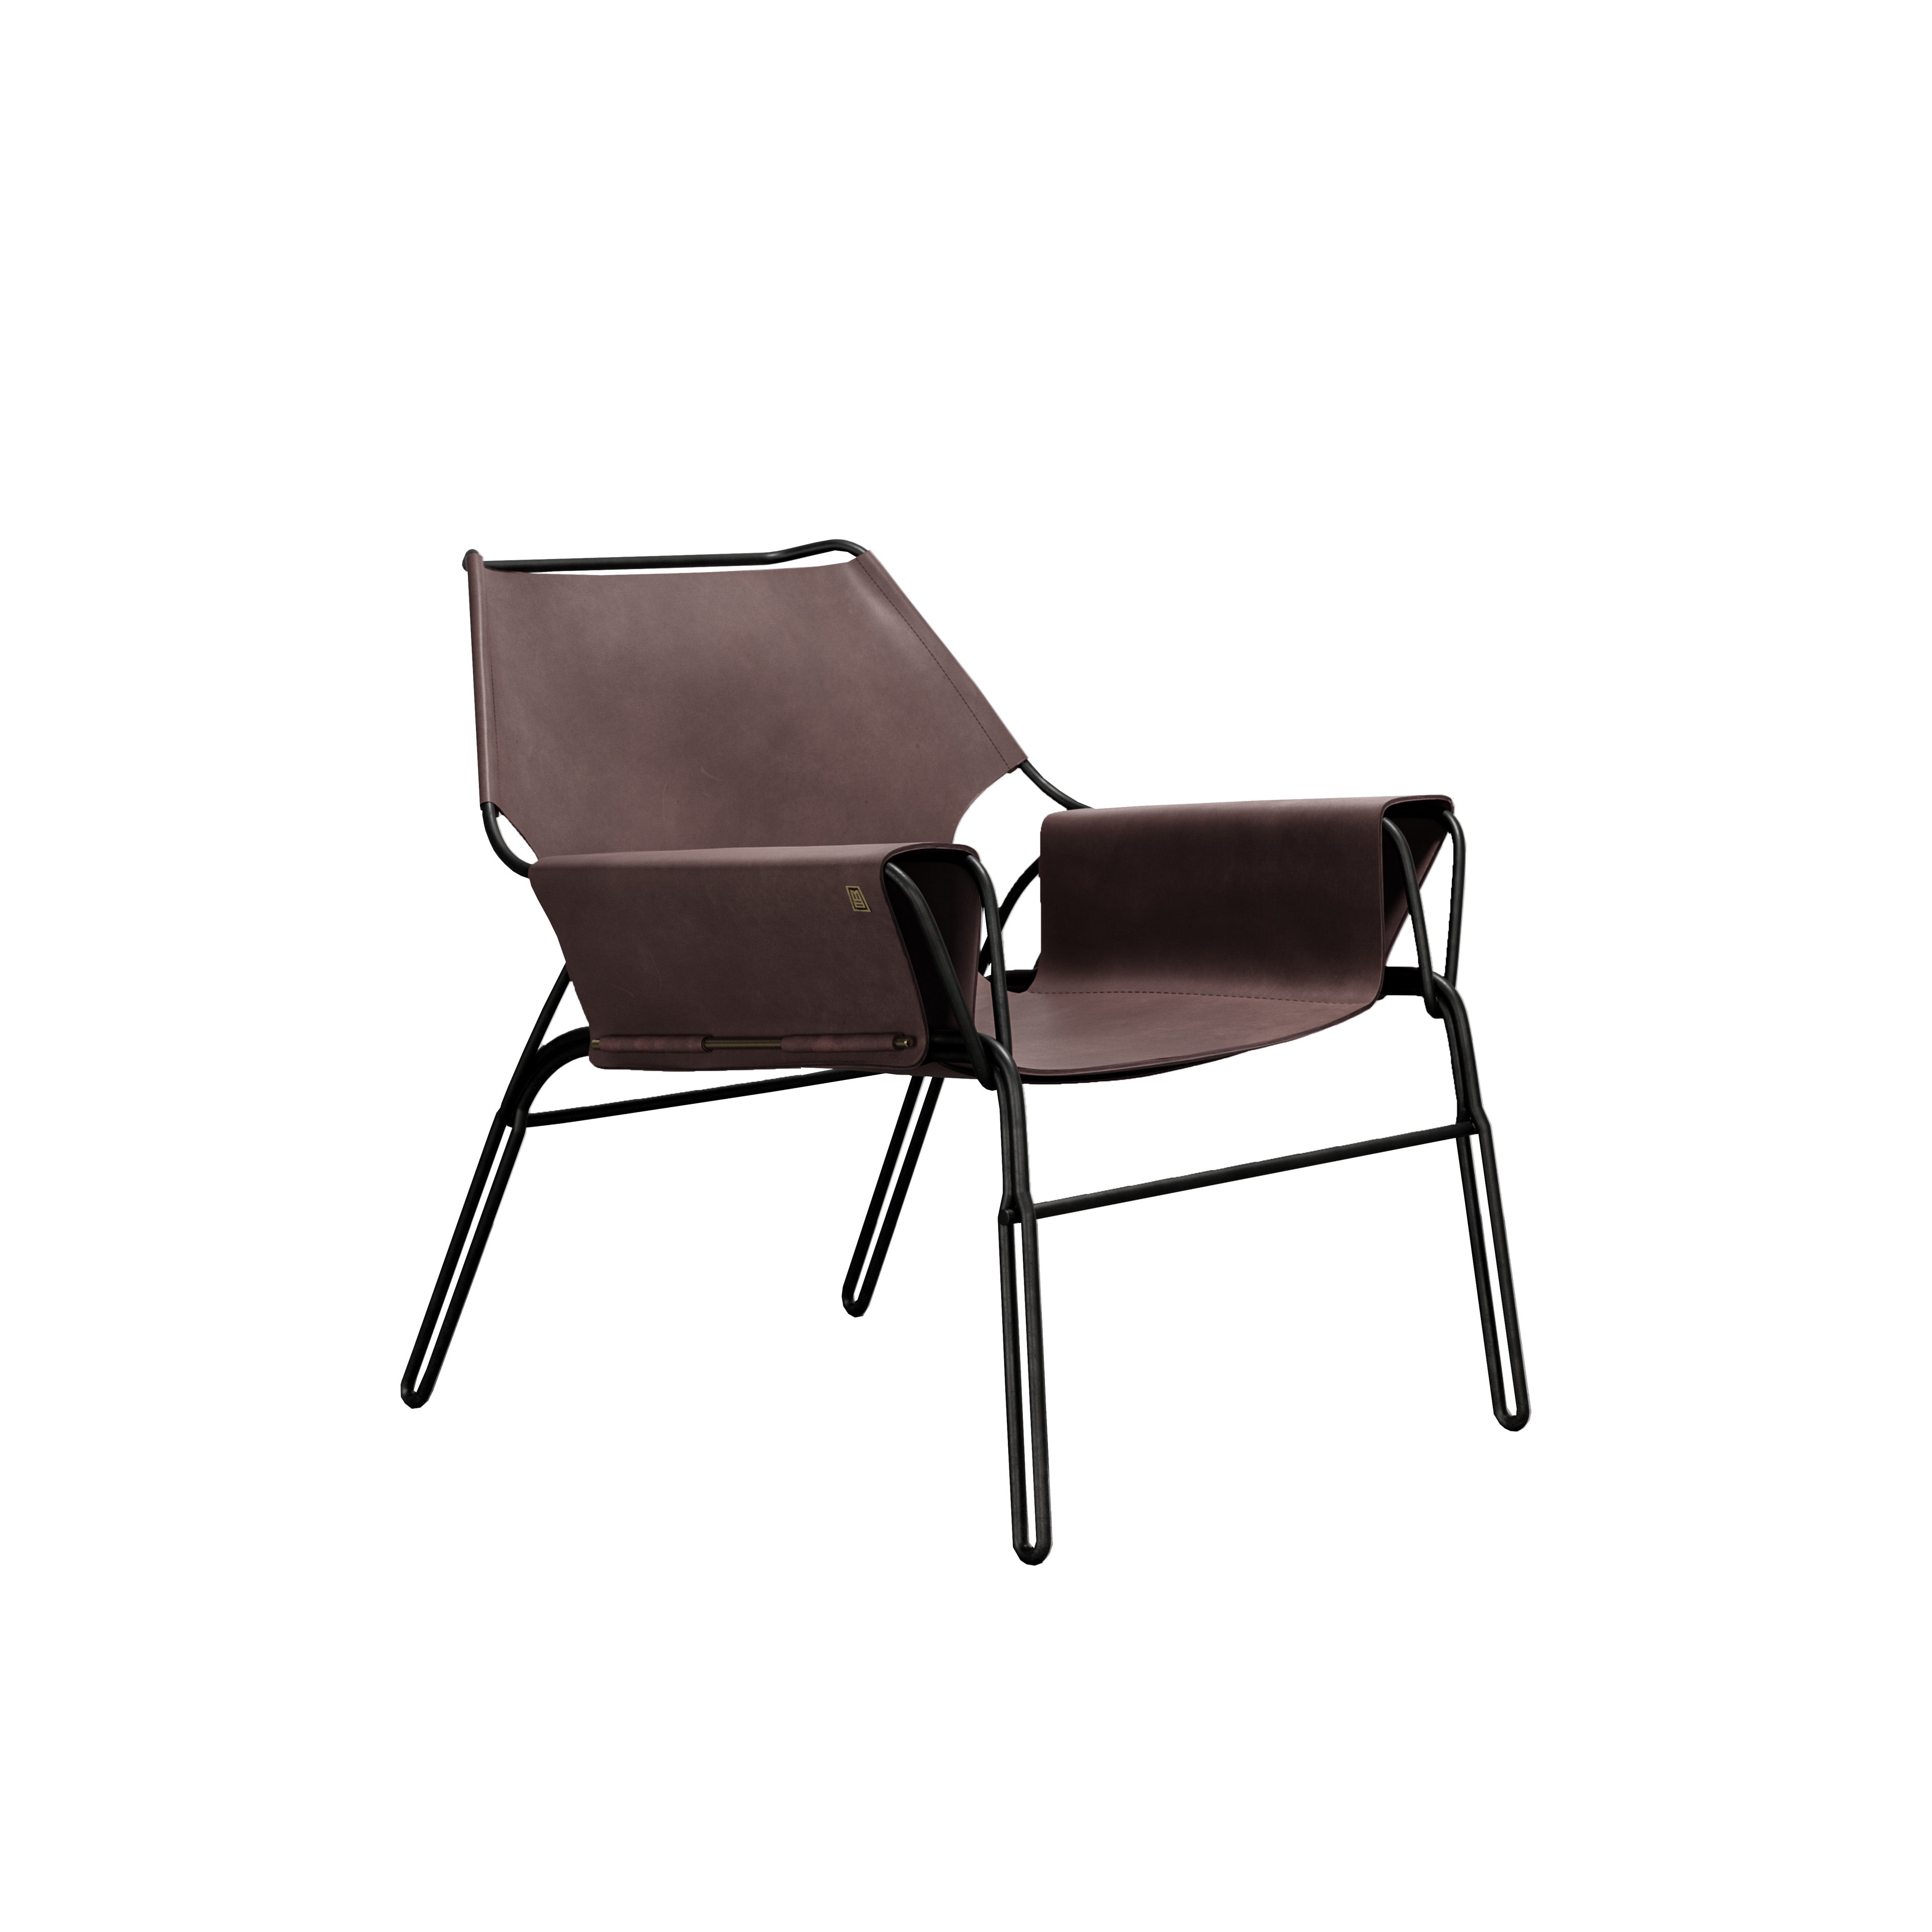 Perfidia_02 Lounge Chair Cognac